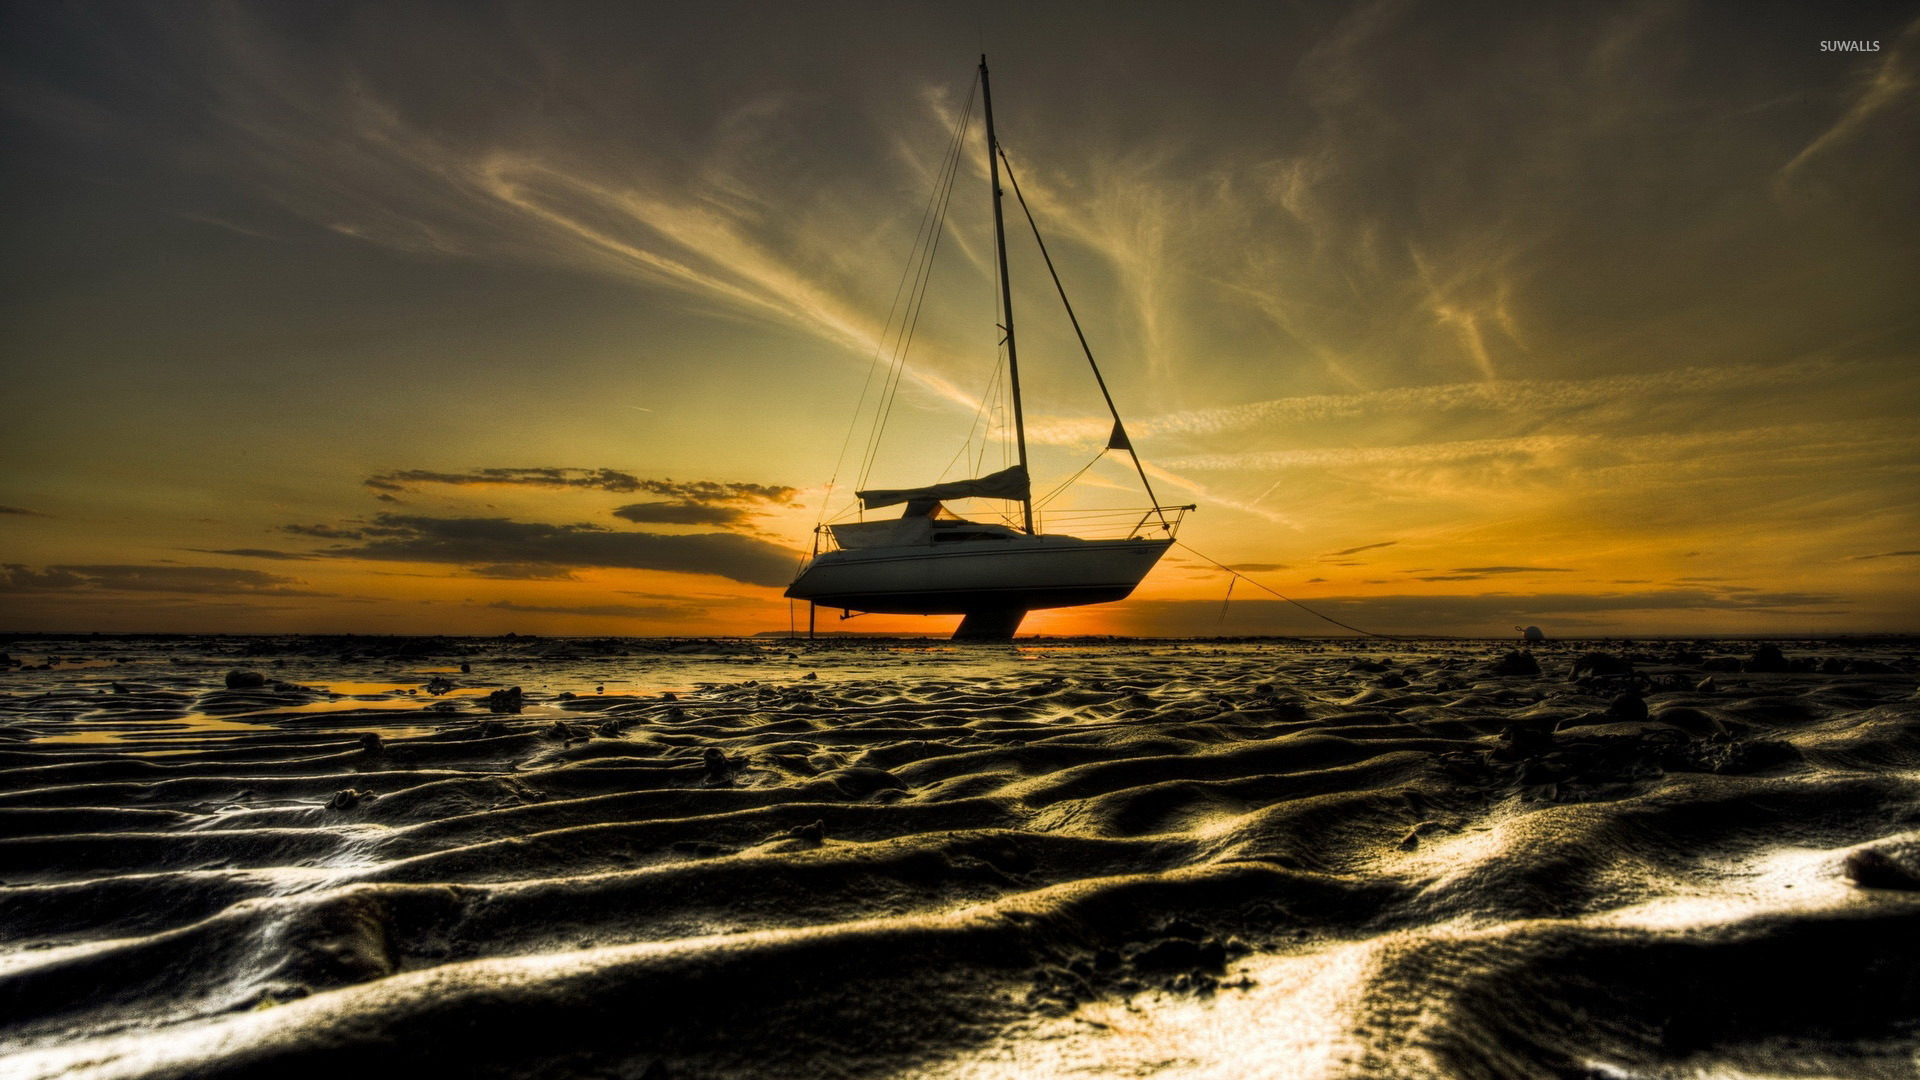 beach sailboat images